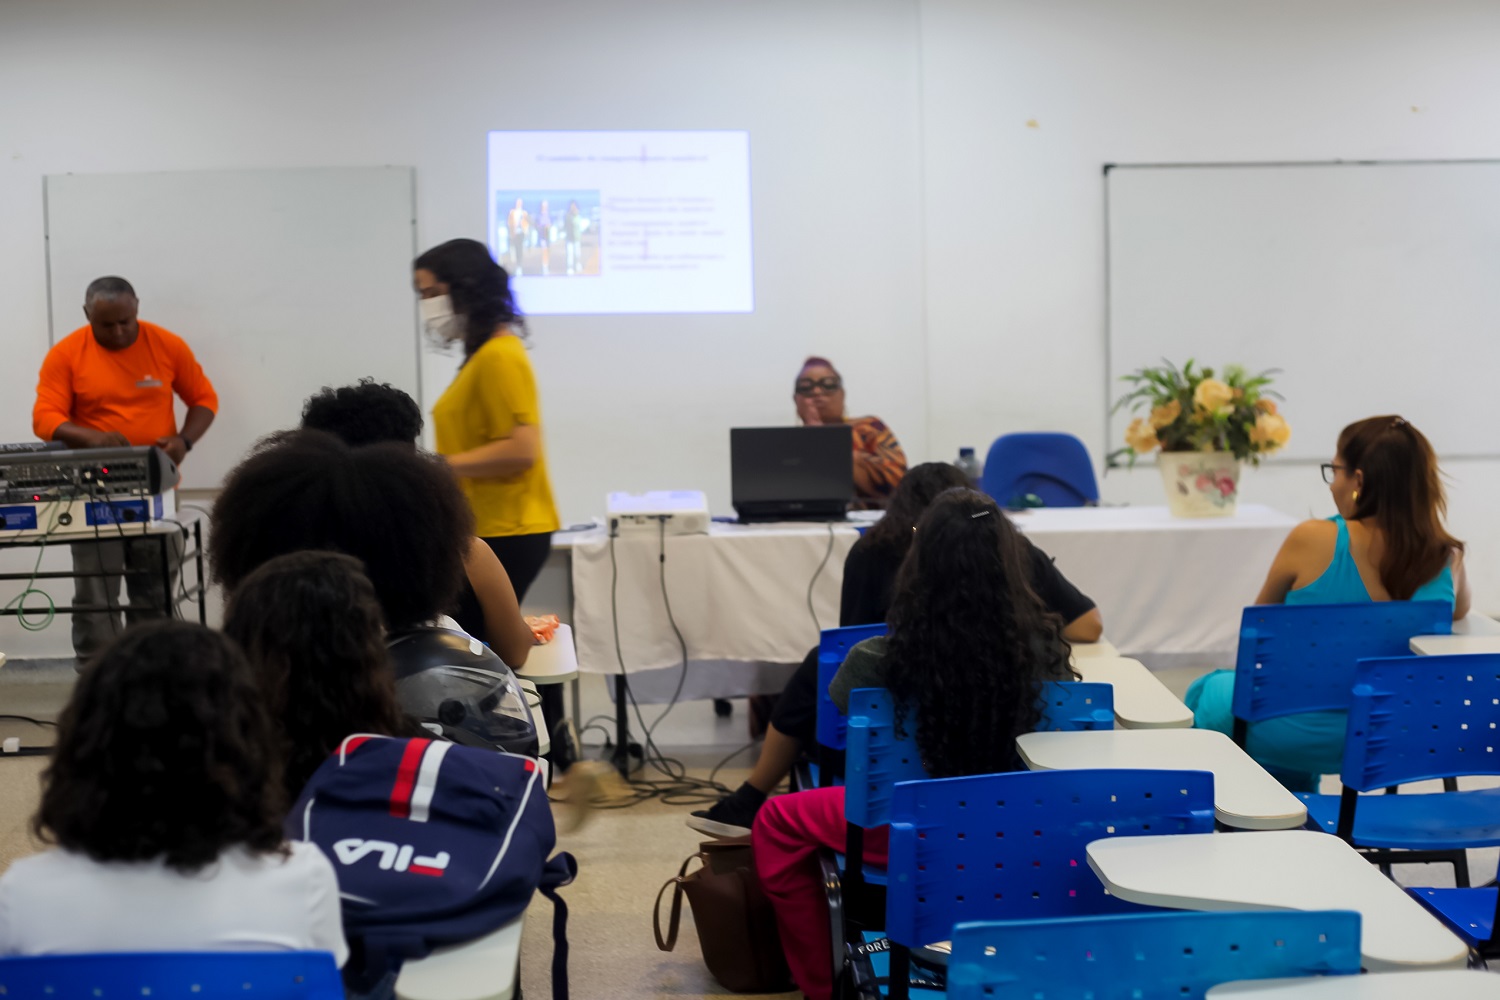 Palestra da professora Ritta Barcelos foi realizada durante a manhã. Imagens: Ana Laura Farias/Campus Lagarto 